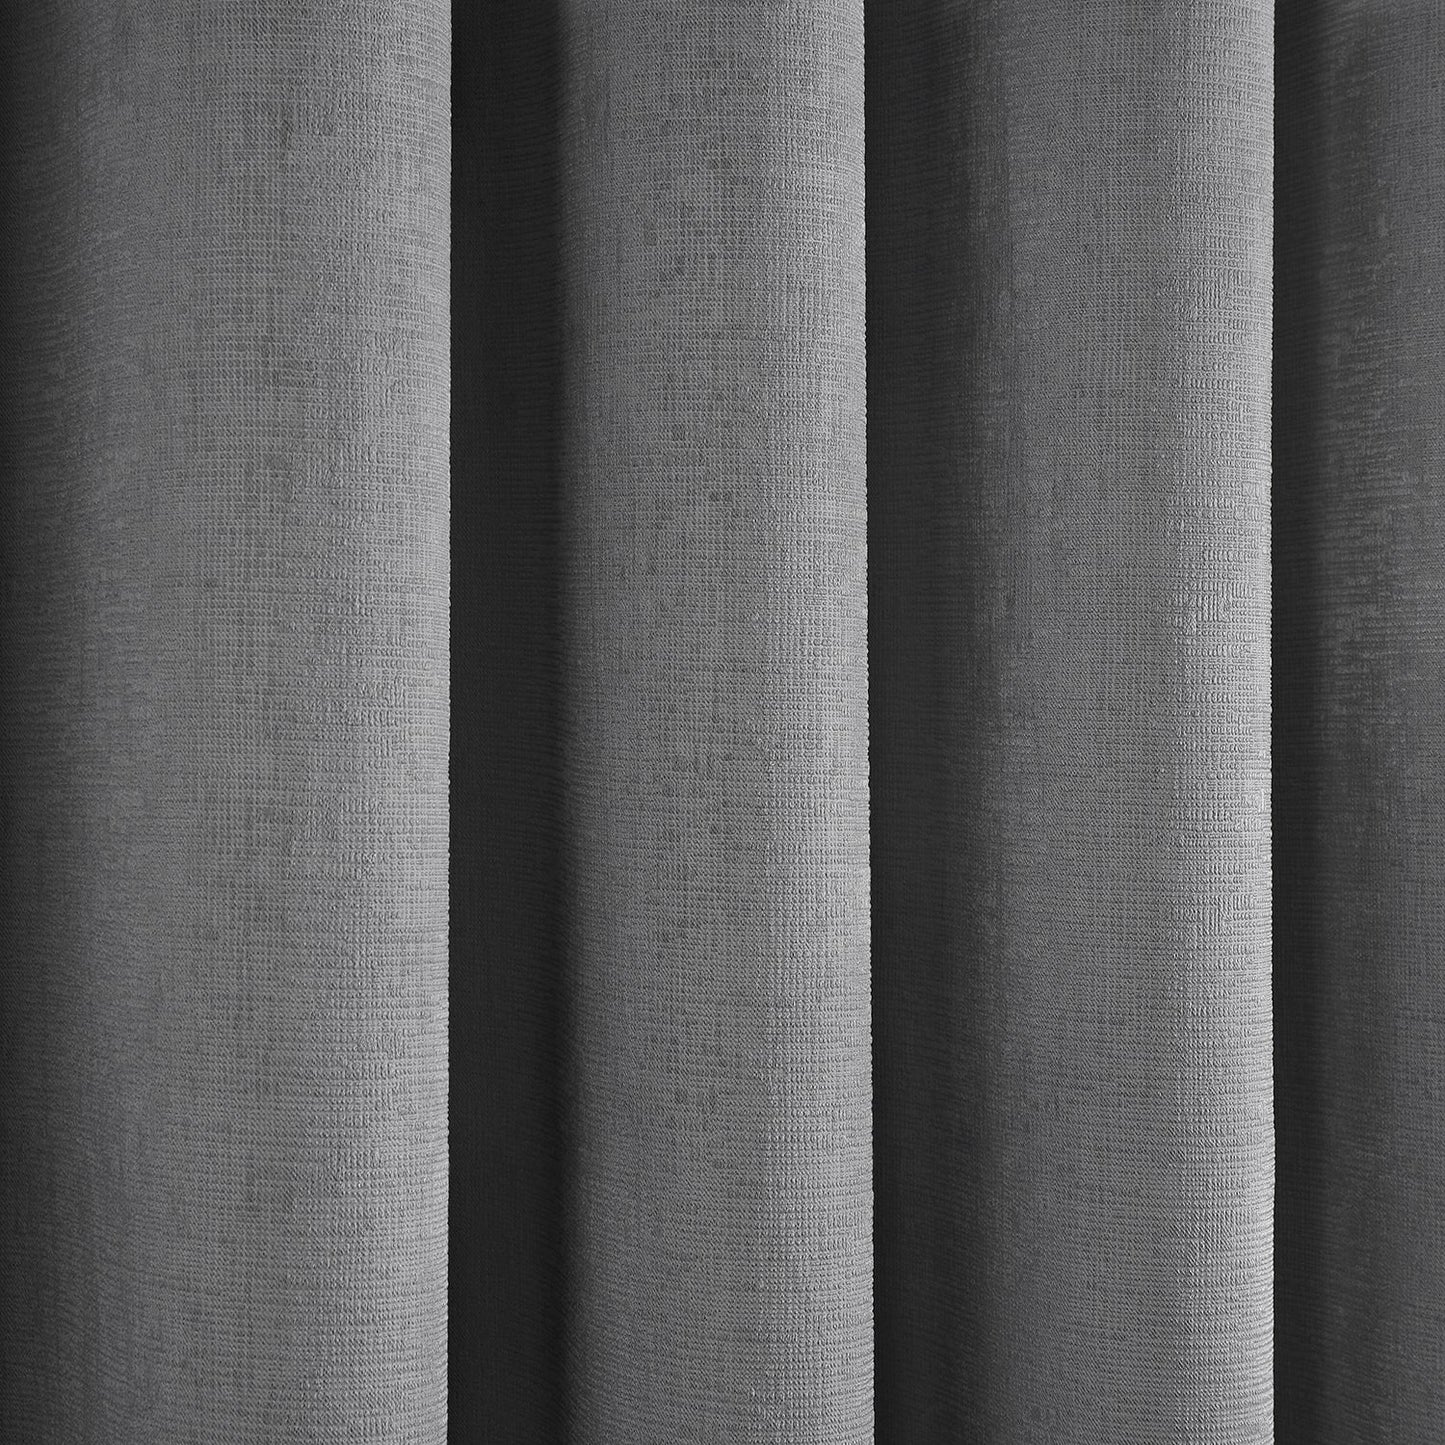 Strata Silver Grey Dim Out Eyelet Curtains